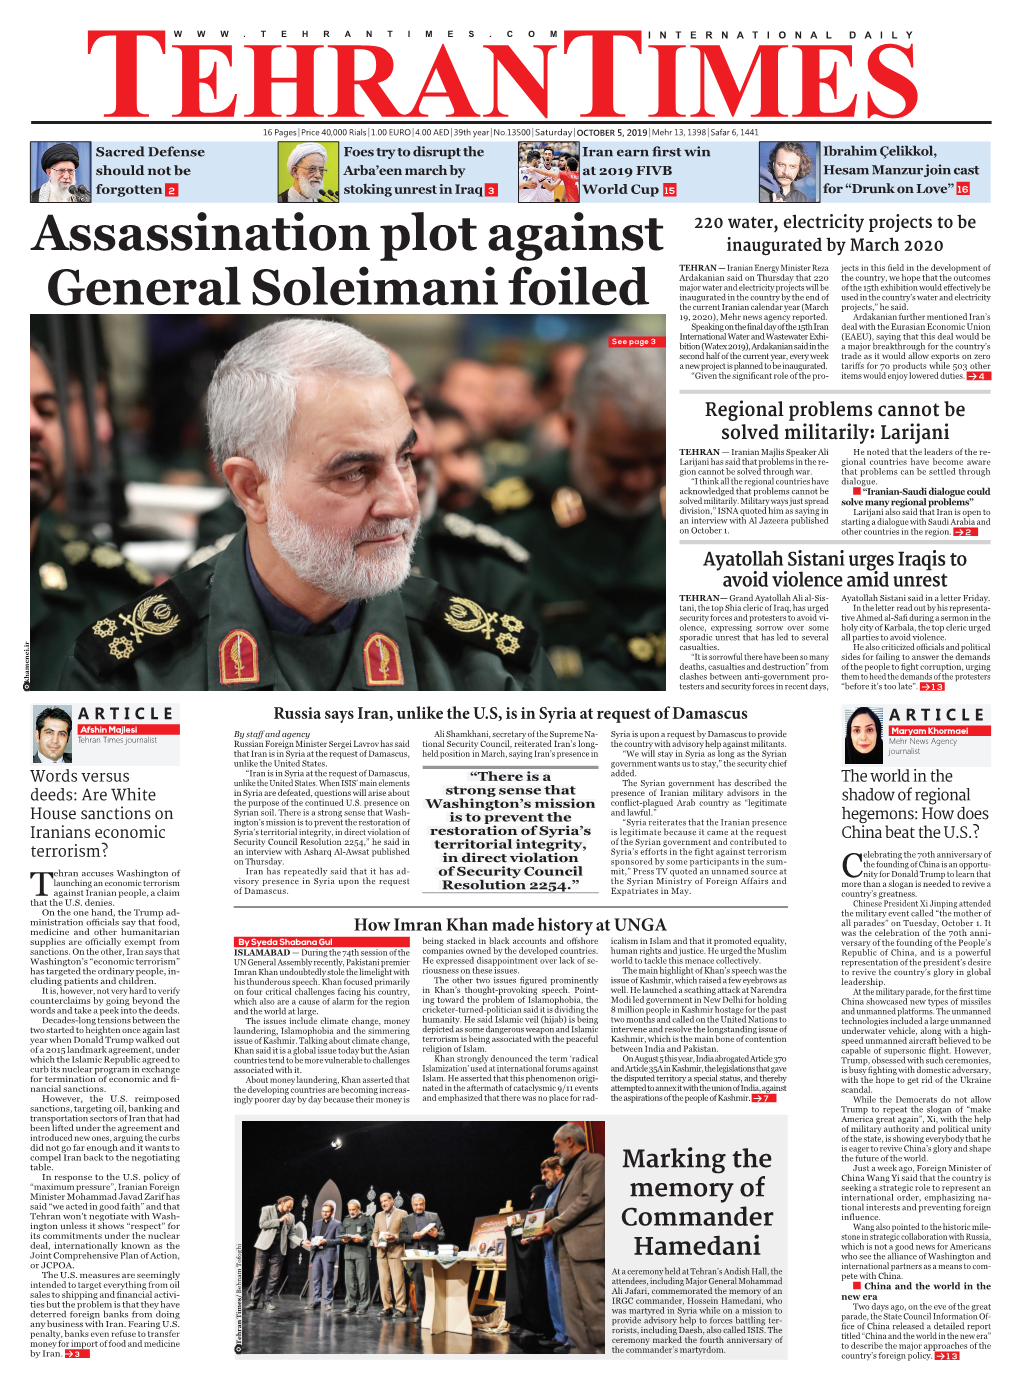 Assassination Plot Against General Soleimani Foiled